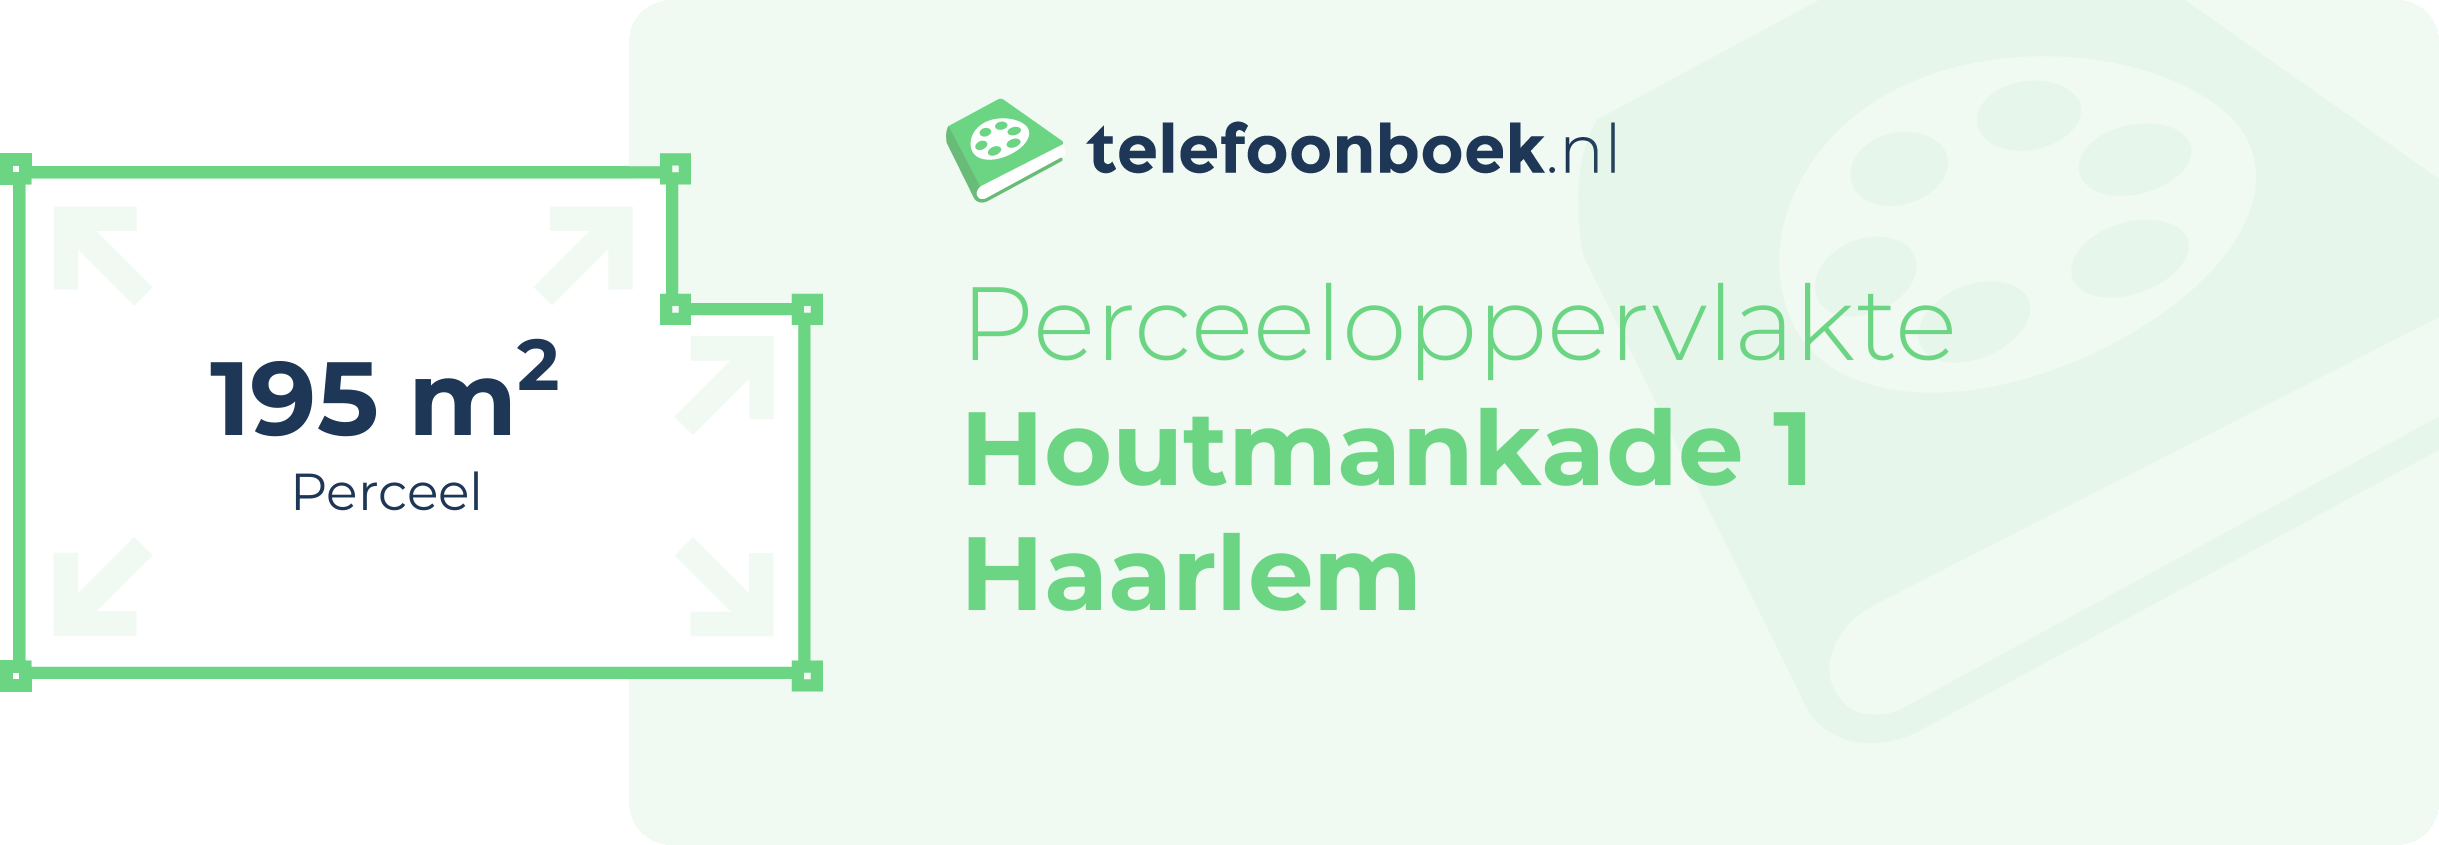 Perceeloppervlakte Houtmankade 1 Haarlem